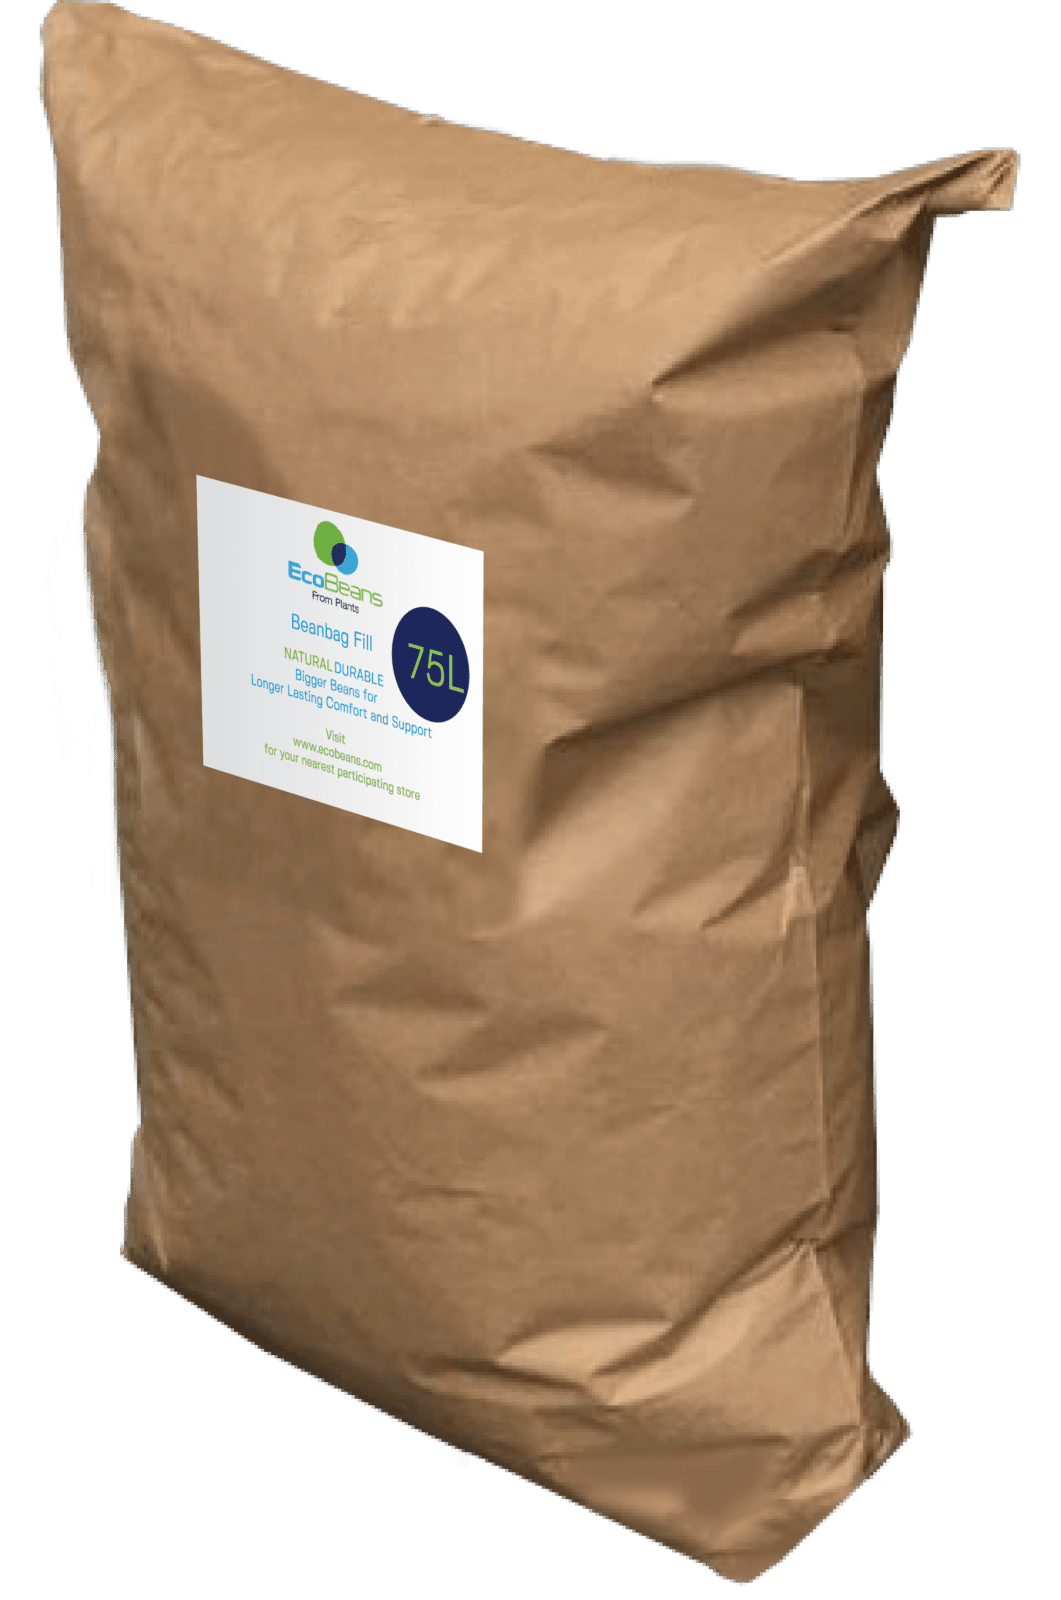 75L Natural Bean Bag Fill by Eco Beans - Commercial Supplies Ltd (CSL)